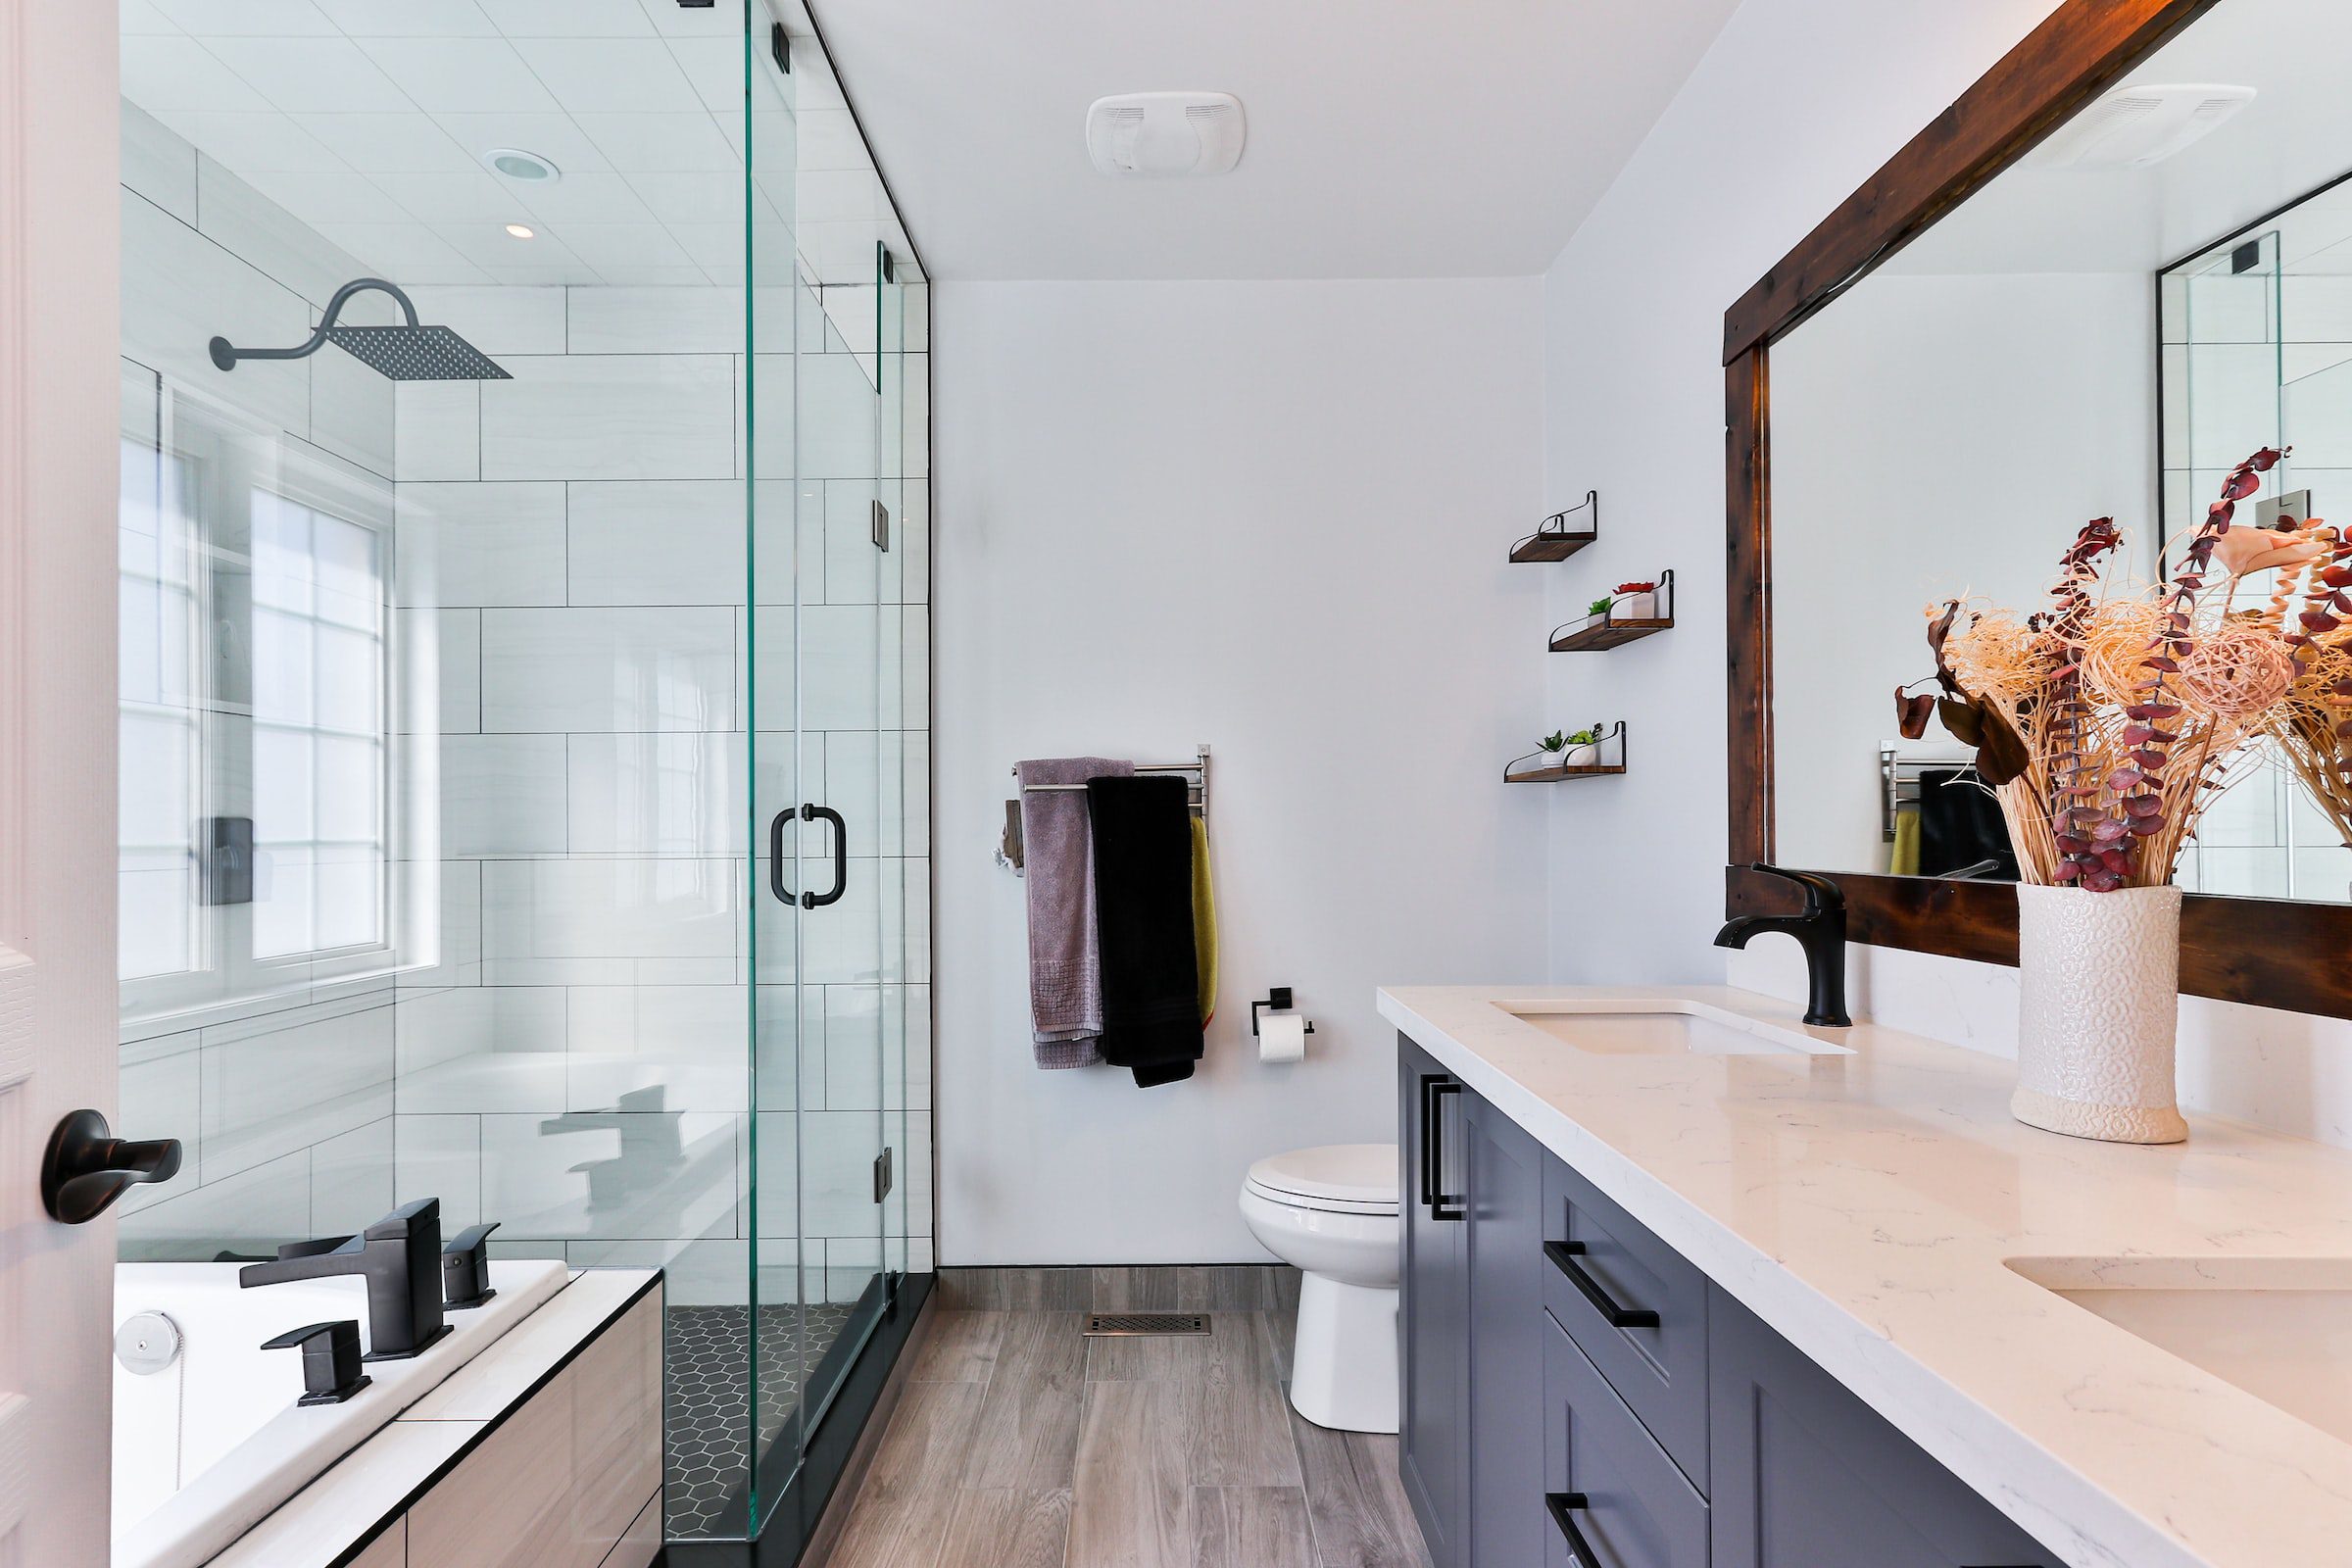 DIY: 5 Common Household Bathroom Cleaners